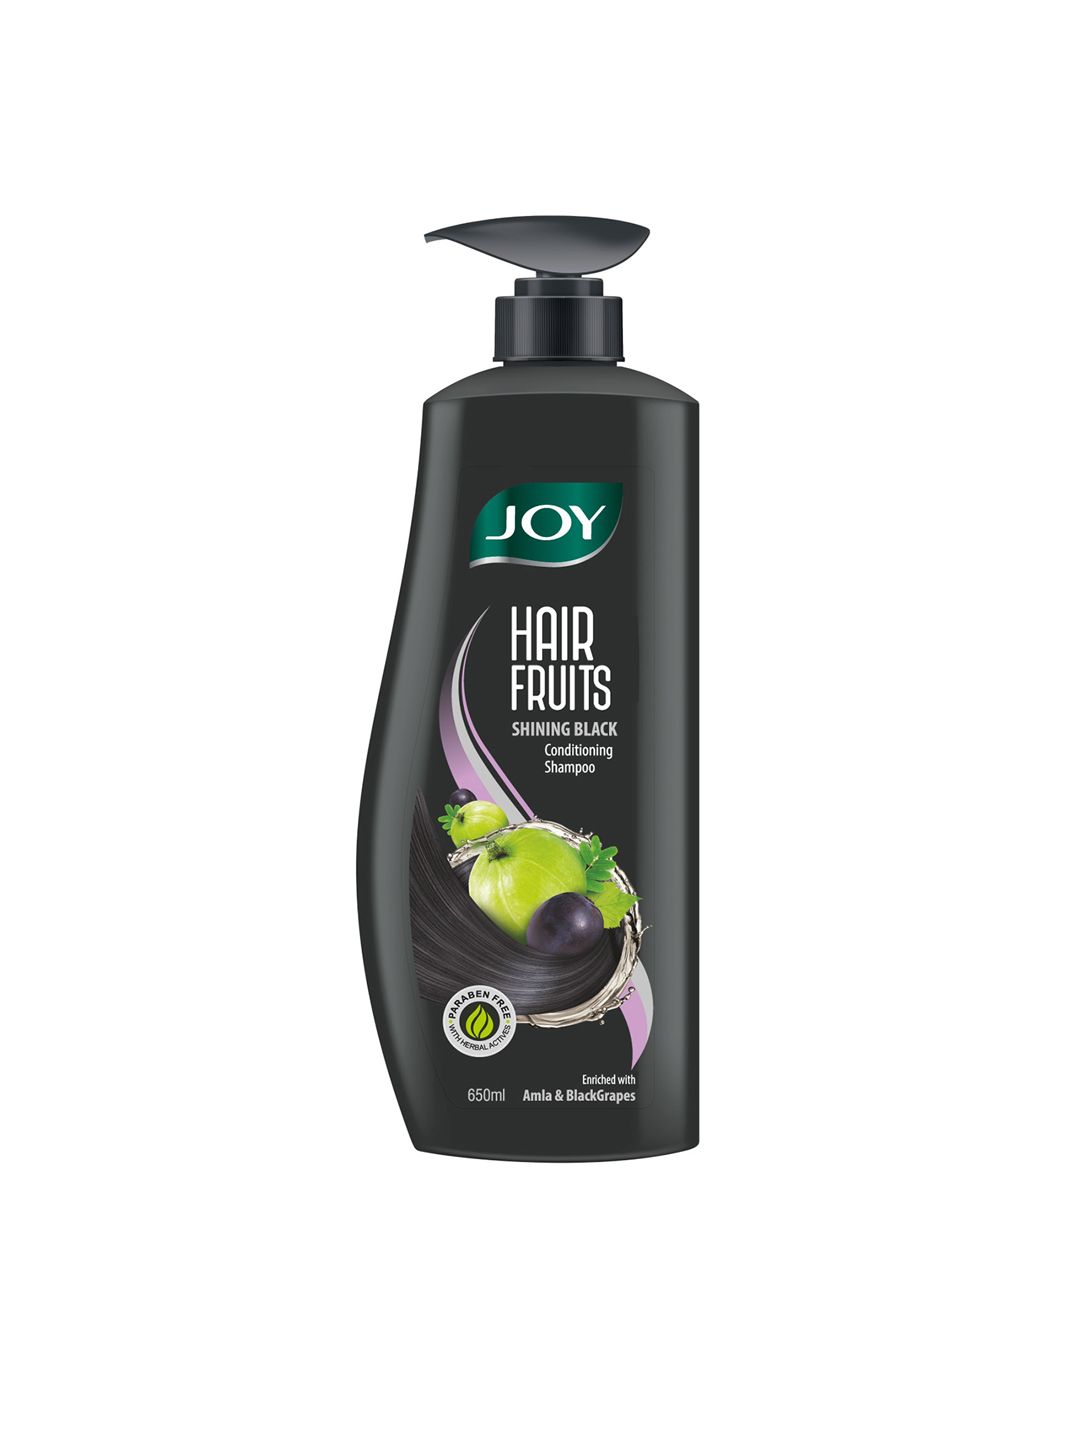 JOY Hair Fruits Shining Black Conditioning Shampoo 650 ml Price in India